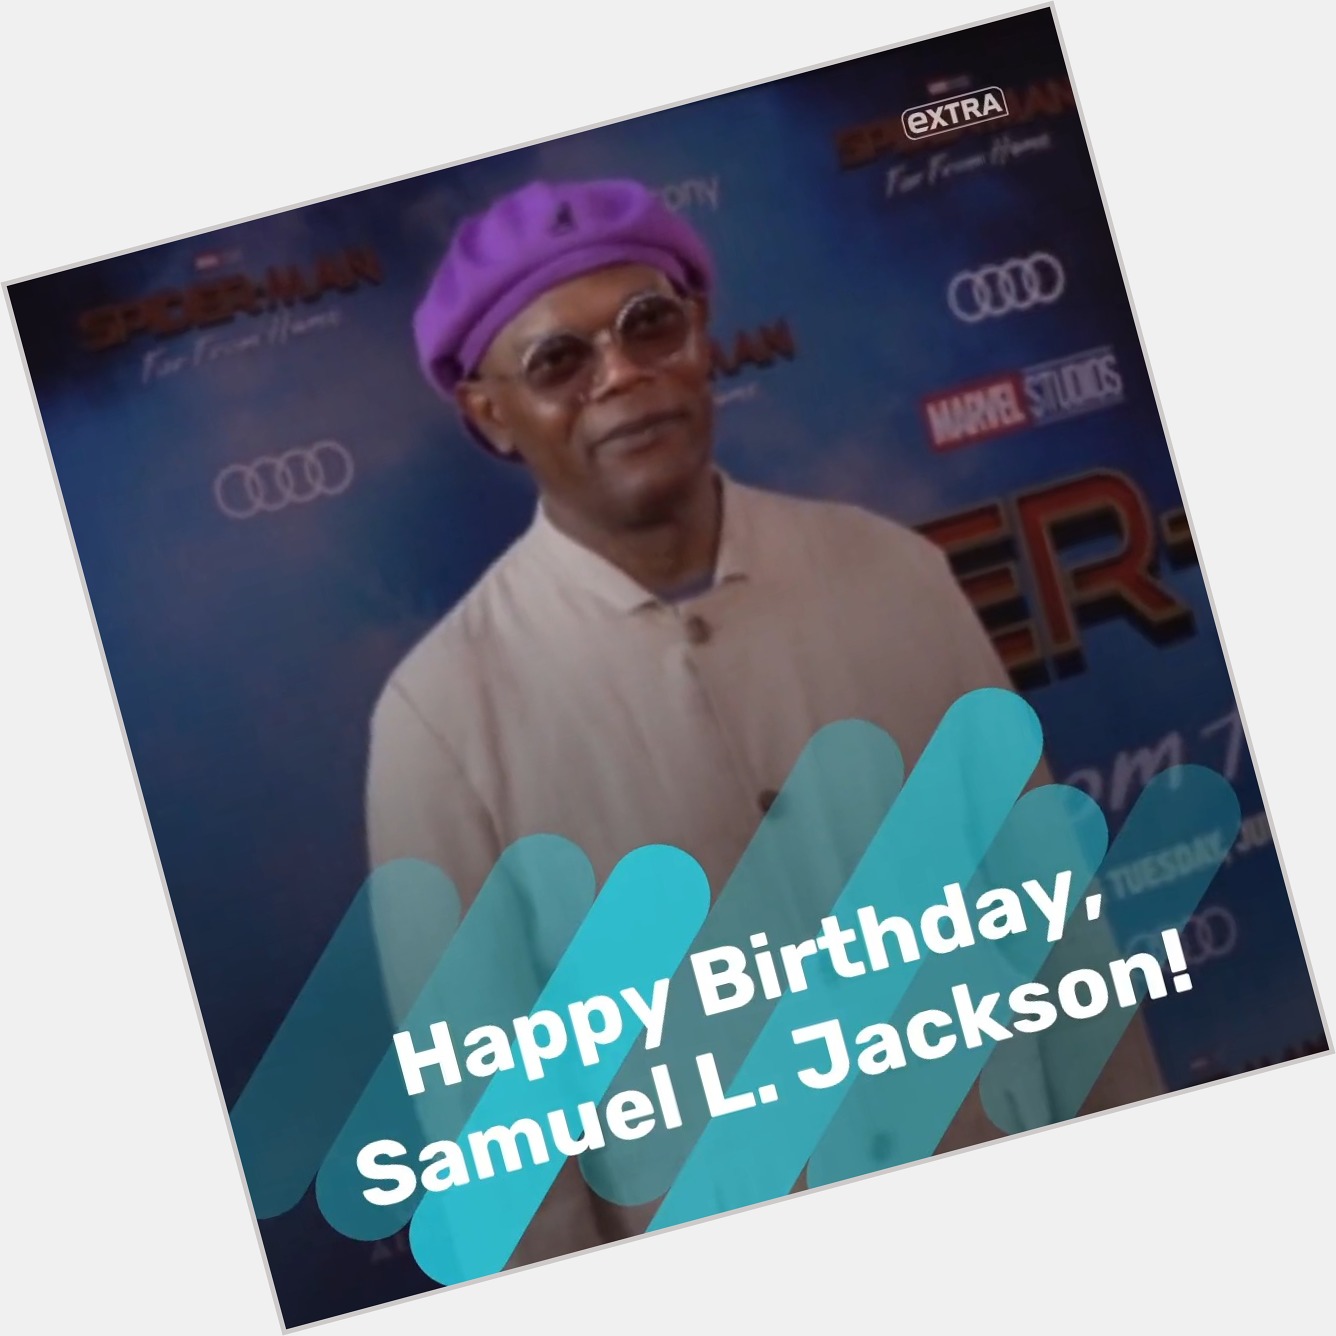 Happy birthday, Samuel L. Jackson!  